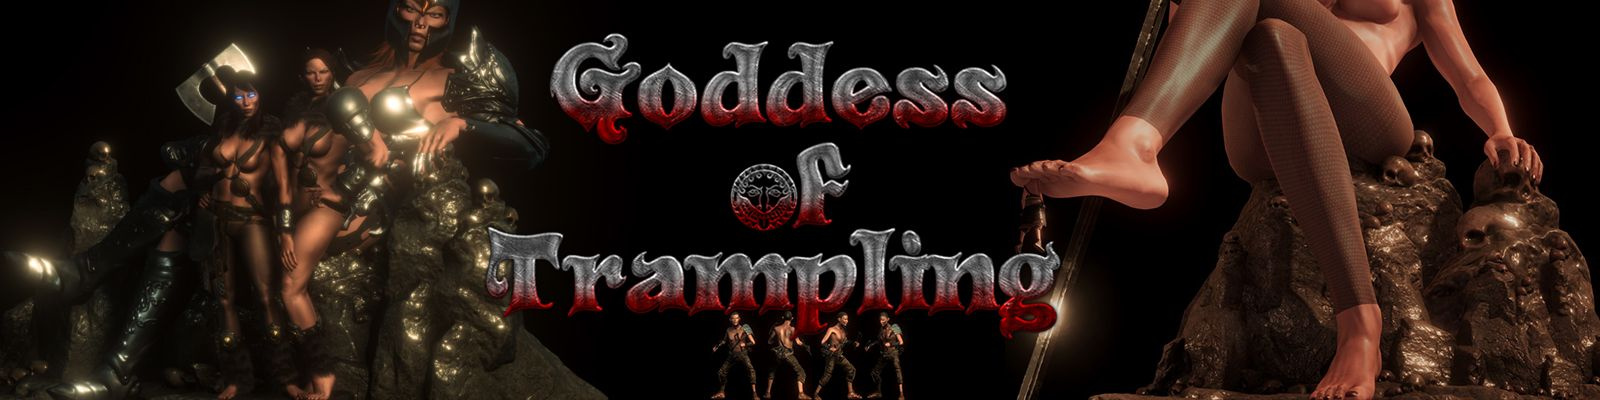 Goddess of Trampling [FWFS]